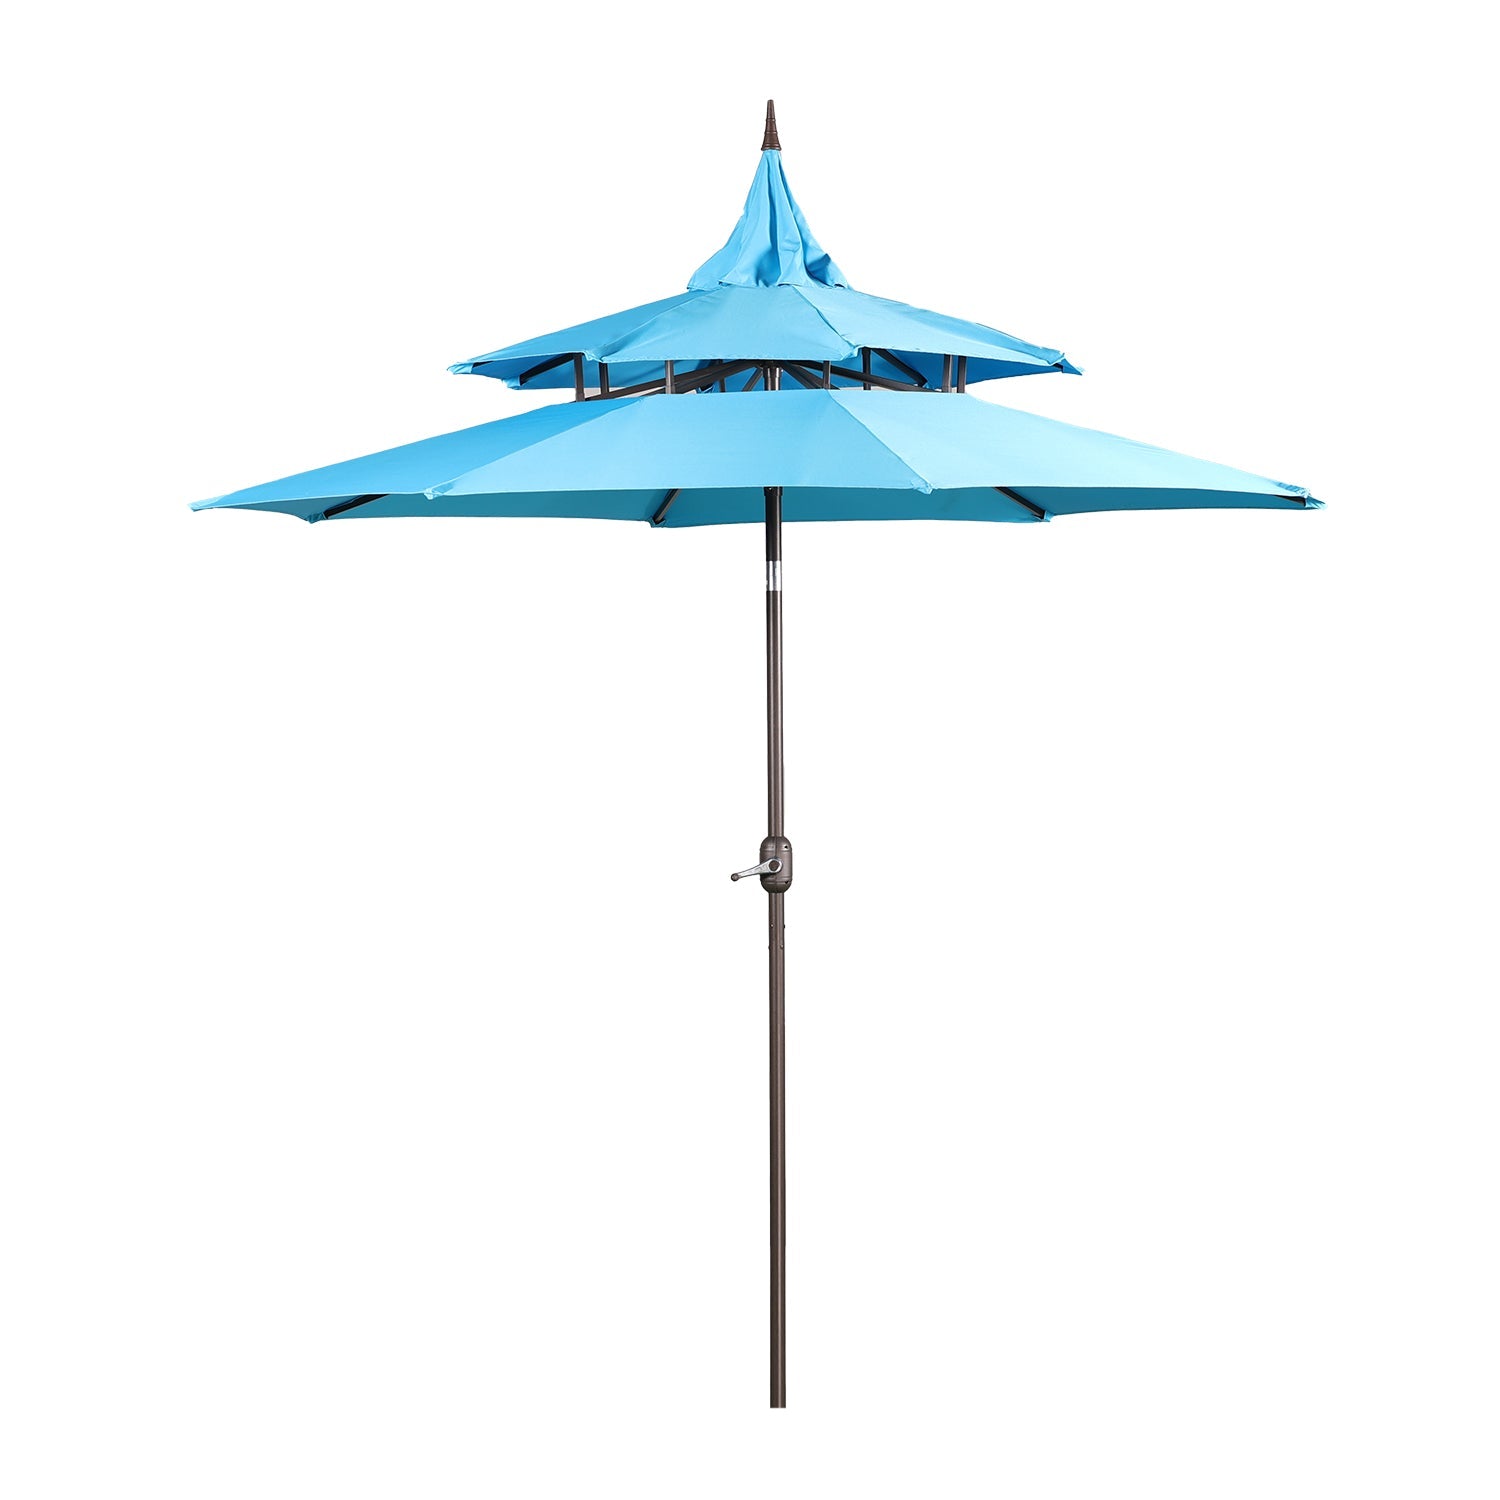 9FT 3-Tier Patio Umbrella with Crank Lift - Outdoor Table Umbrella - Sun Protection with 8 Ribs Patio Umbrella Aoodor LLC Blue  